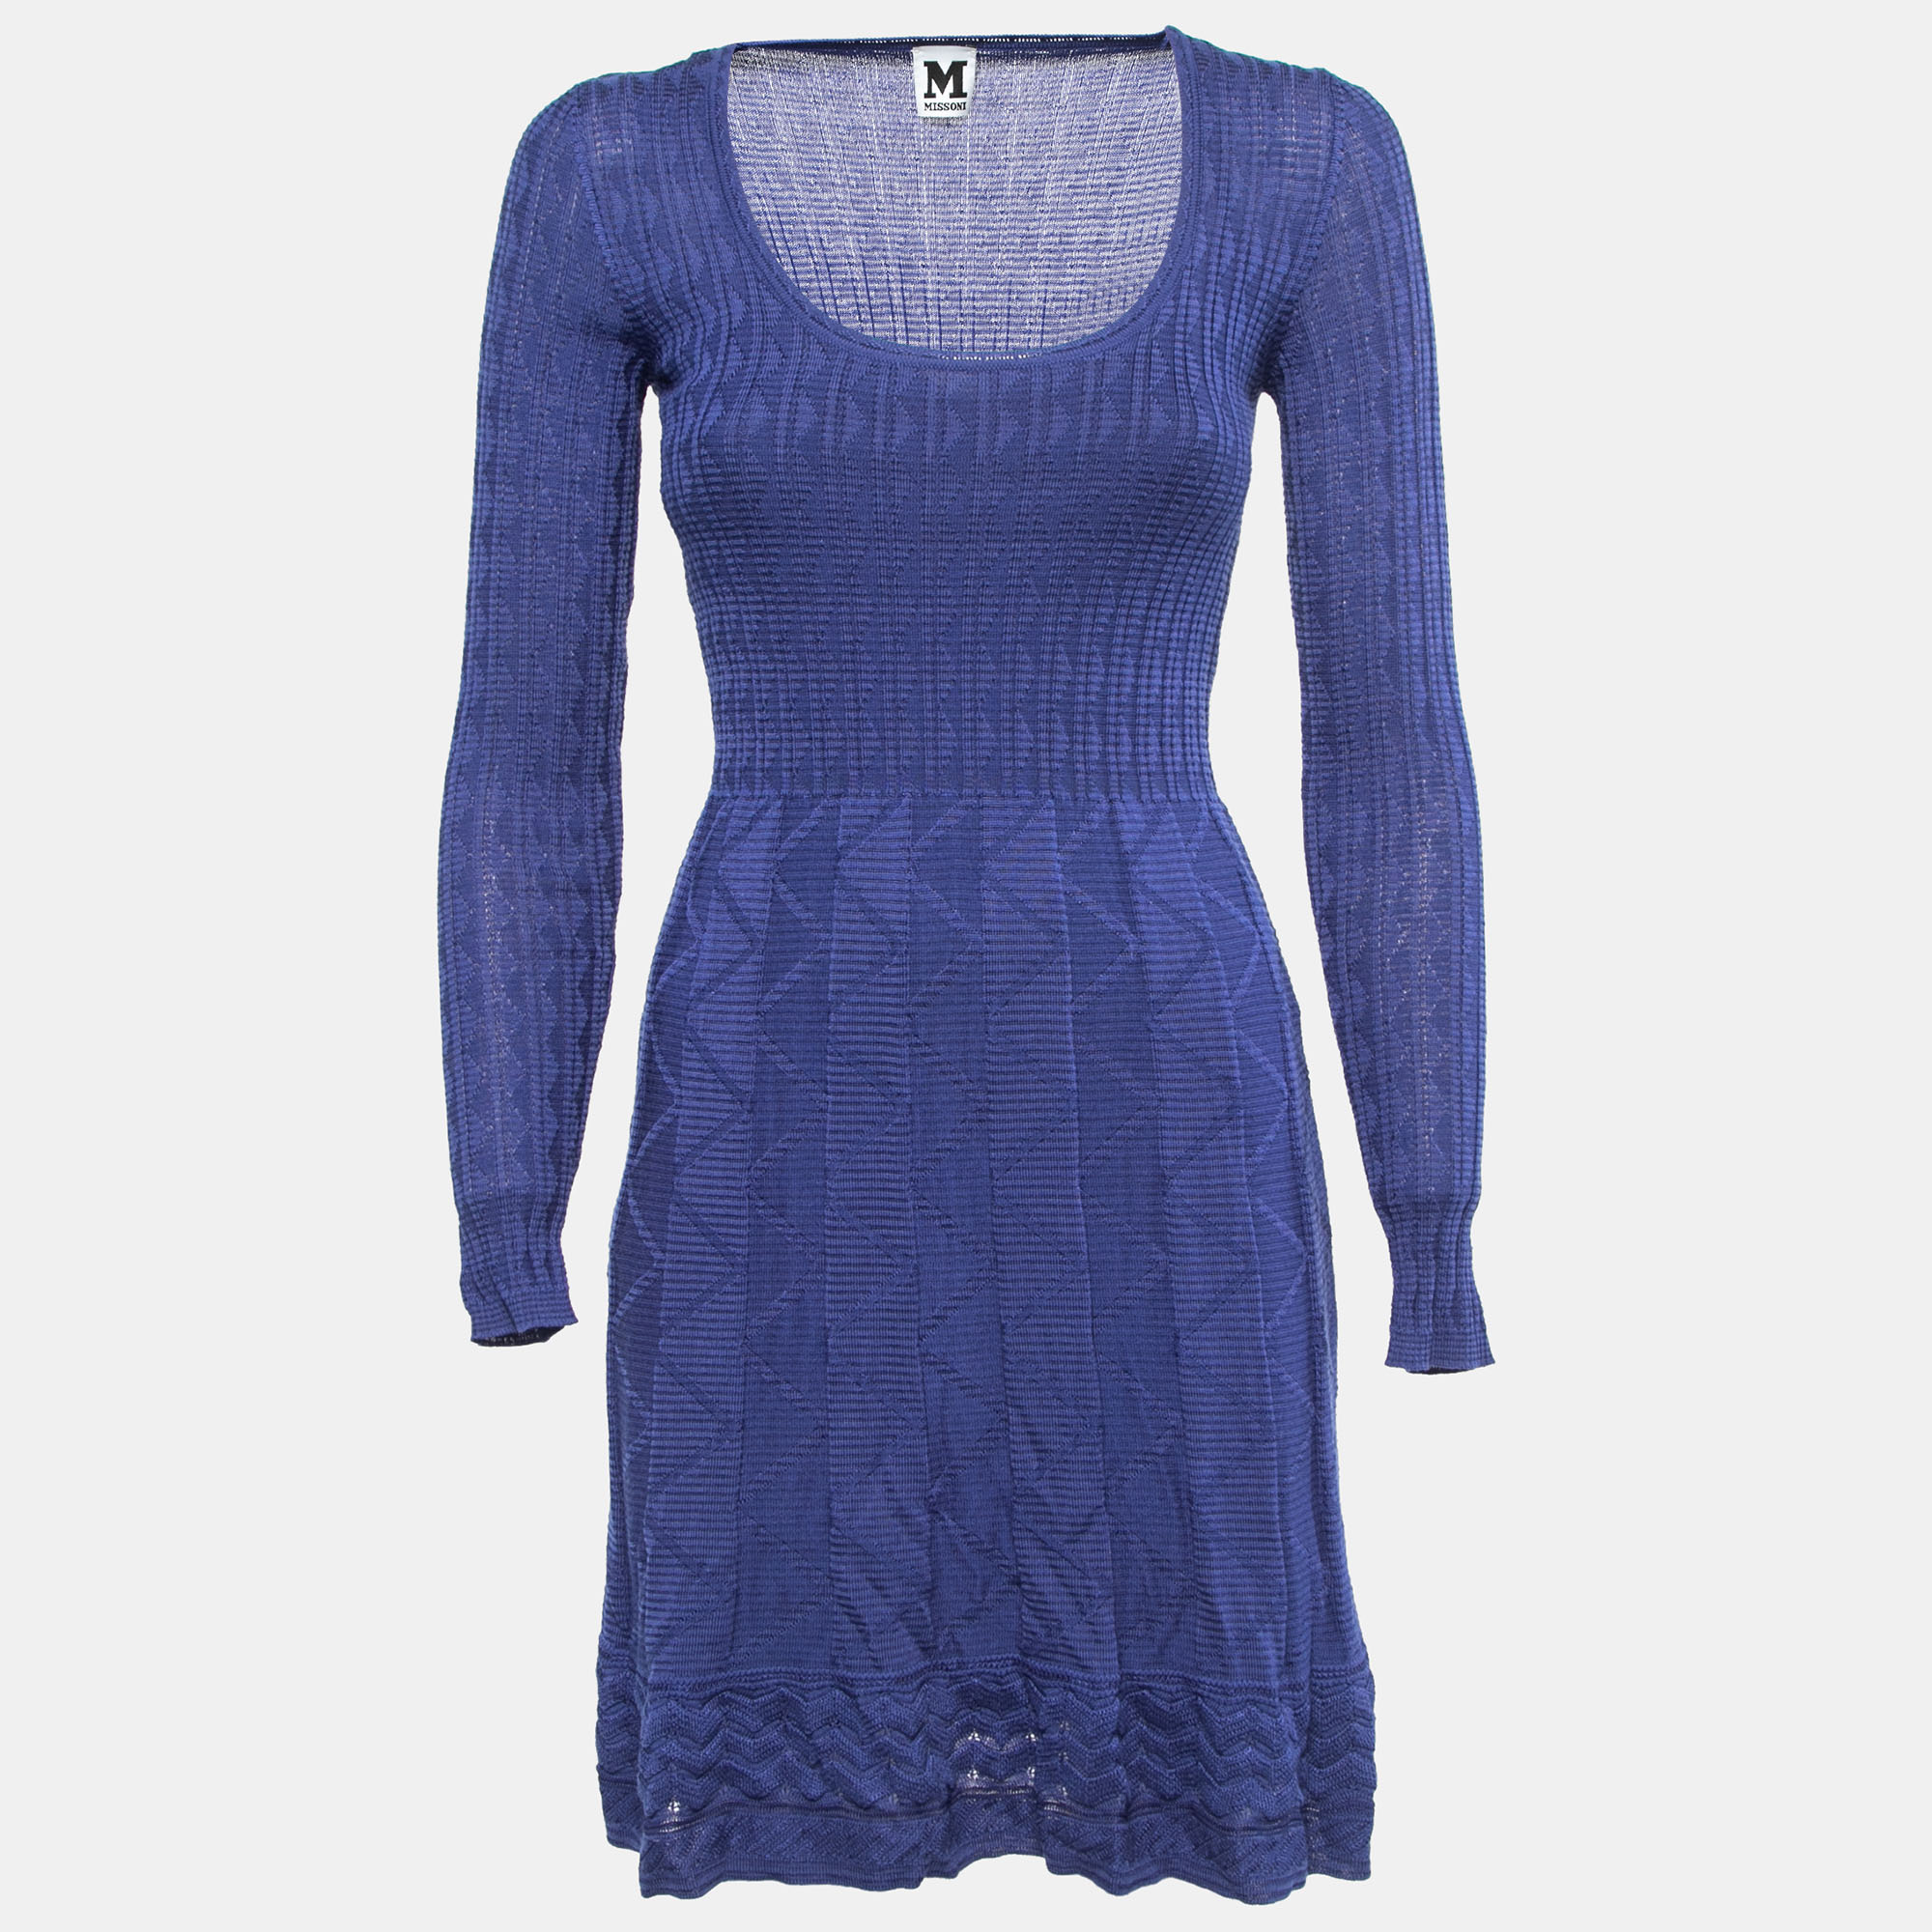 M Missoni Blue Patterned Knit Scoop Neck Flared Midi Dress S